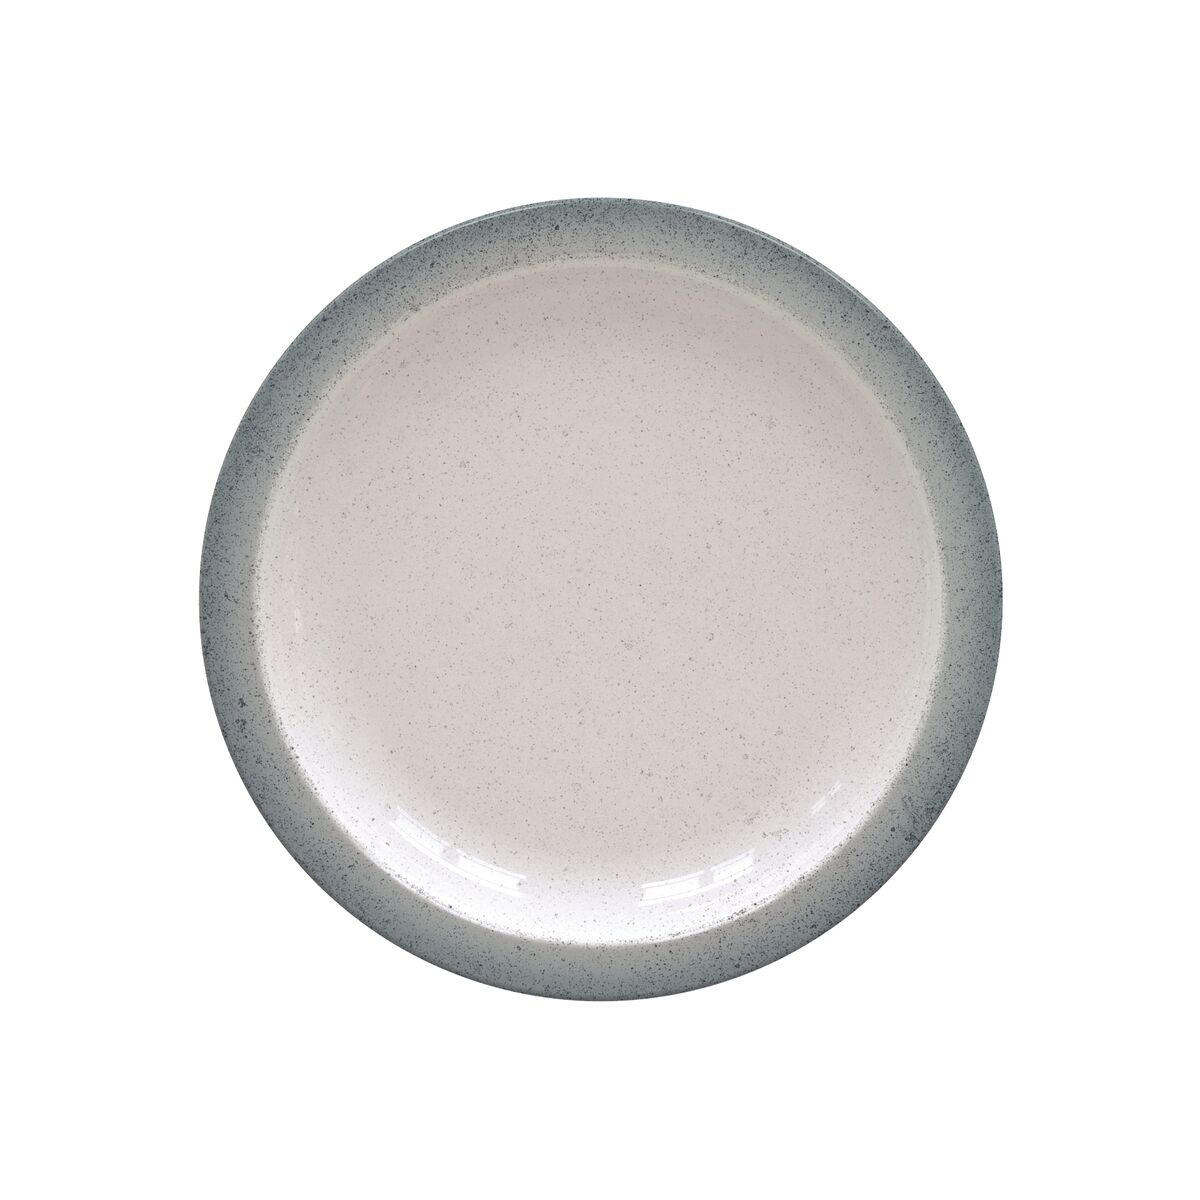 Tramontina Rústico Grey Decorated Porcelain Dinner Plate, 28 cm